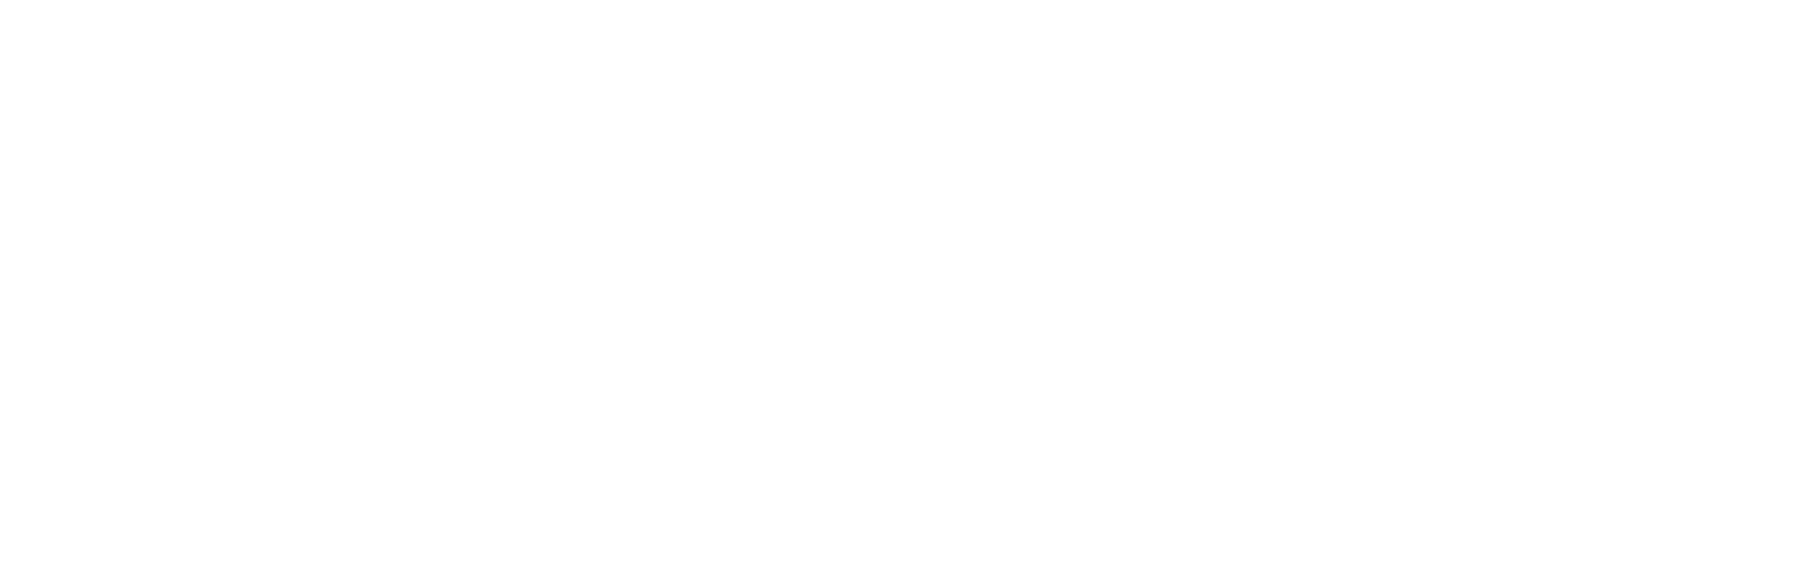 Tagline-Revive